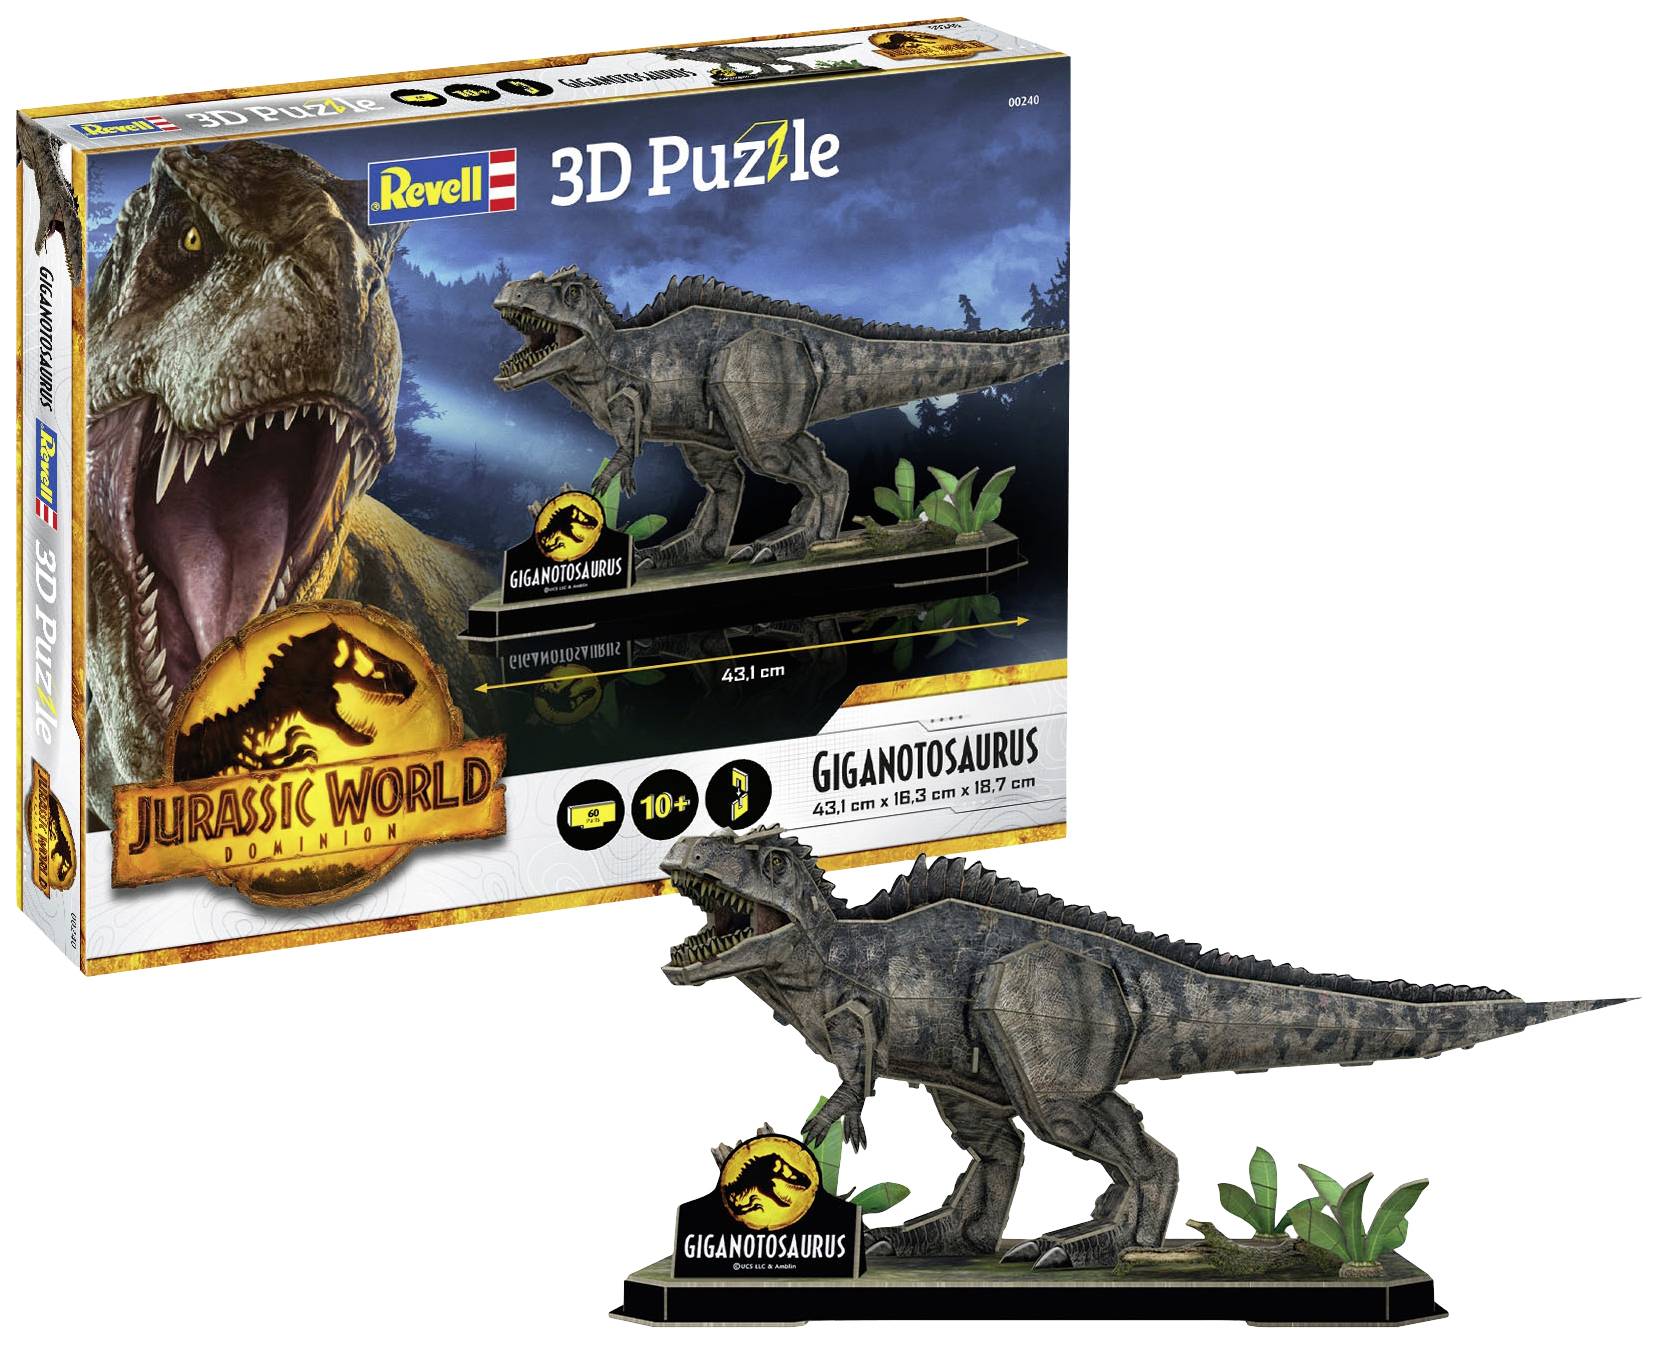 3D Puzzle - Jurassic World Dominion Giganotosaurus - Loaded Dice